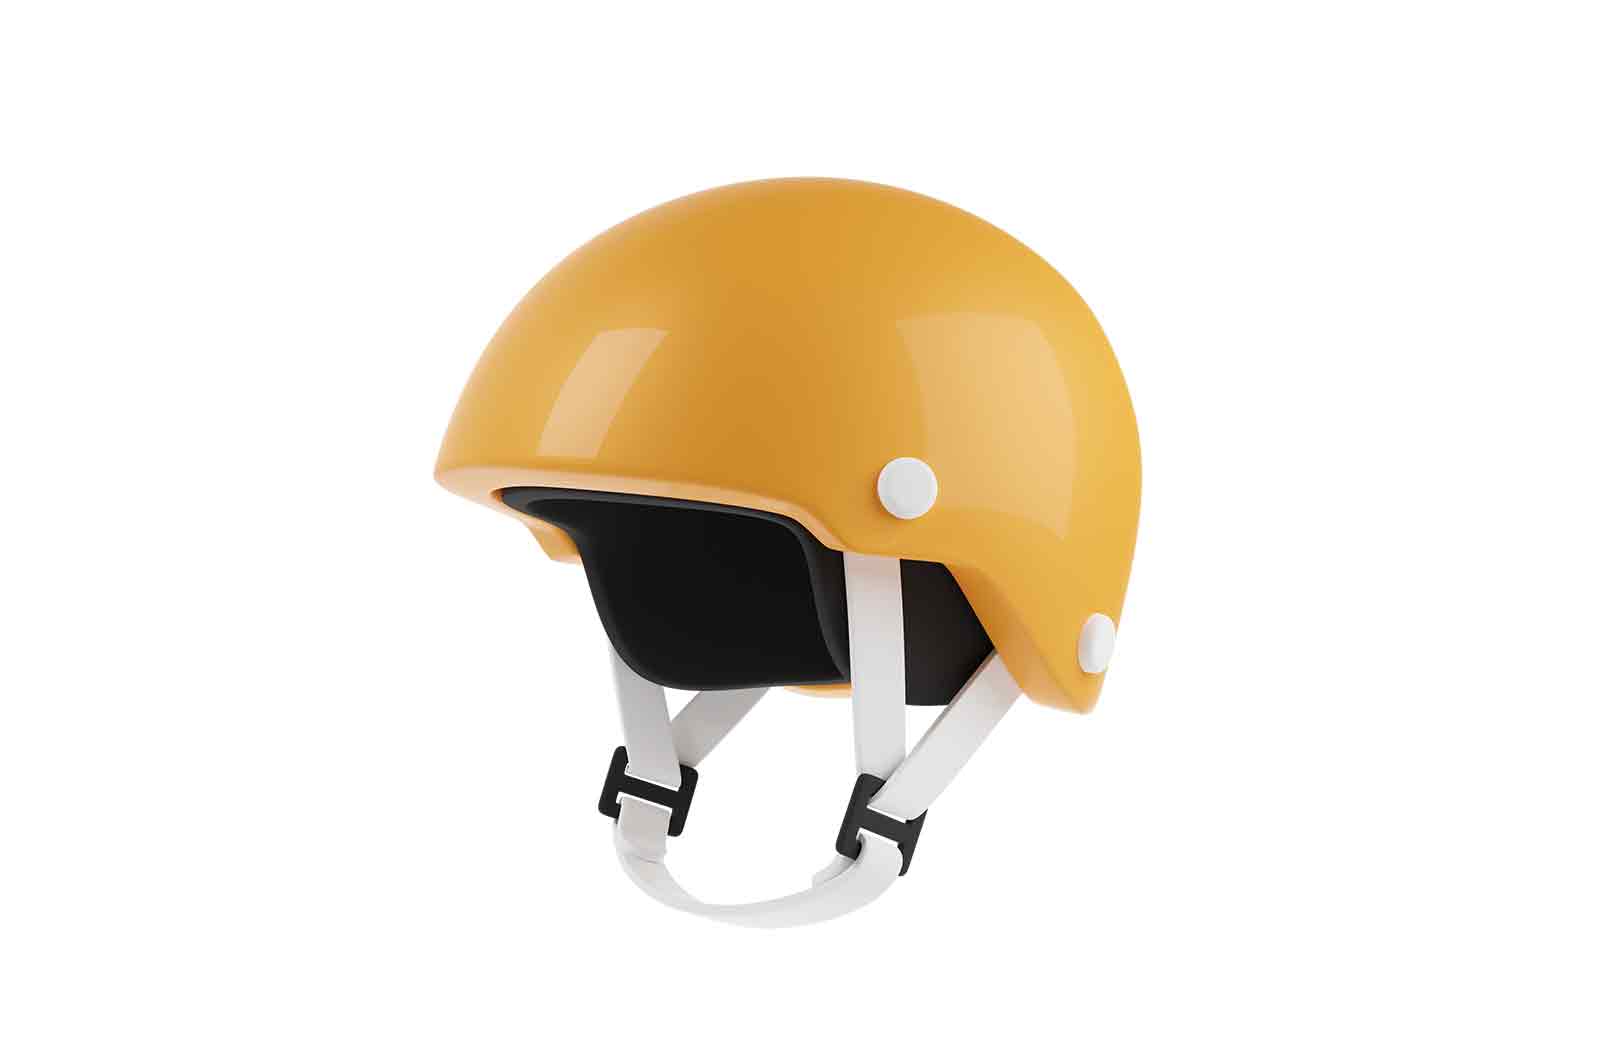 Classic yellow ski helmet 3d rendered illustration. Helmet mountain skiing headwear. Protective sportswear snowboarding ski helmet